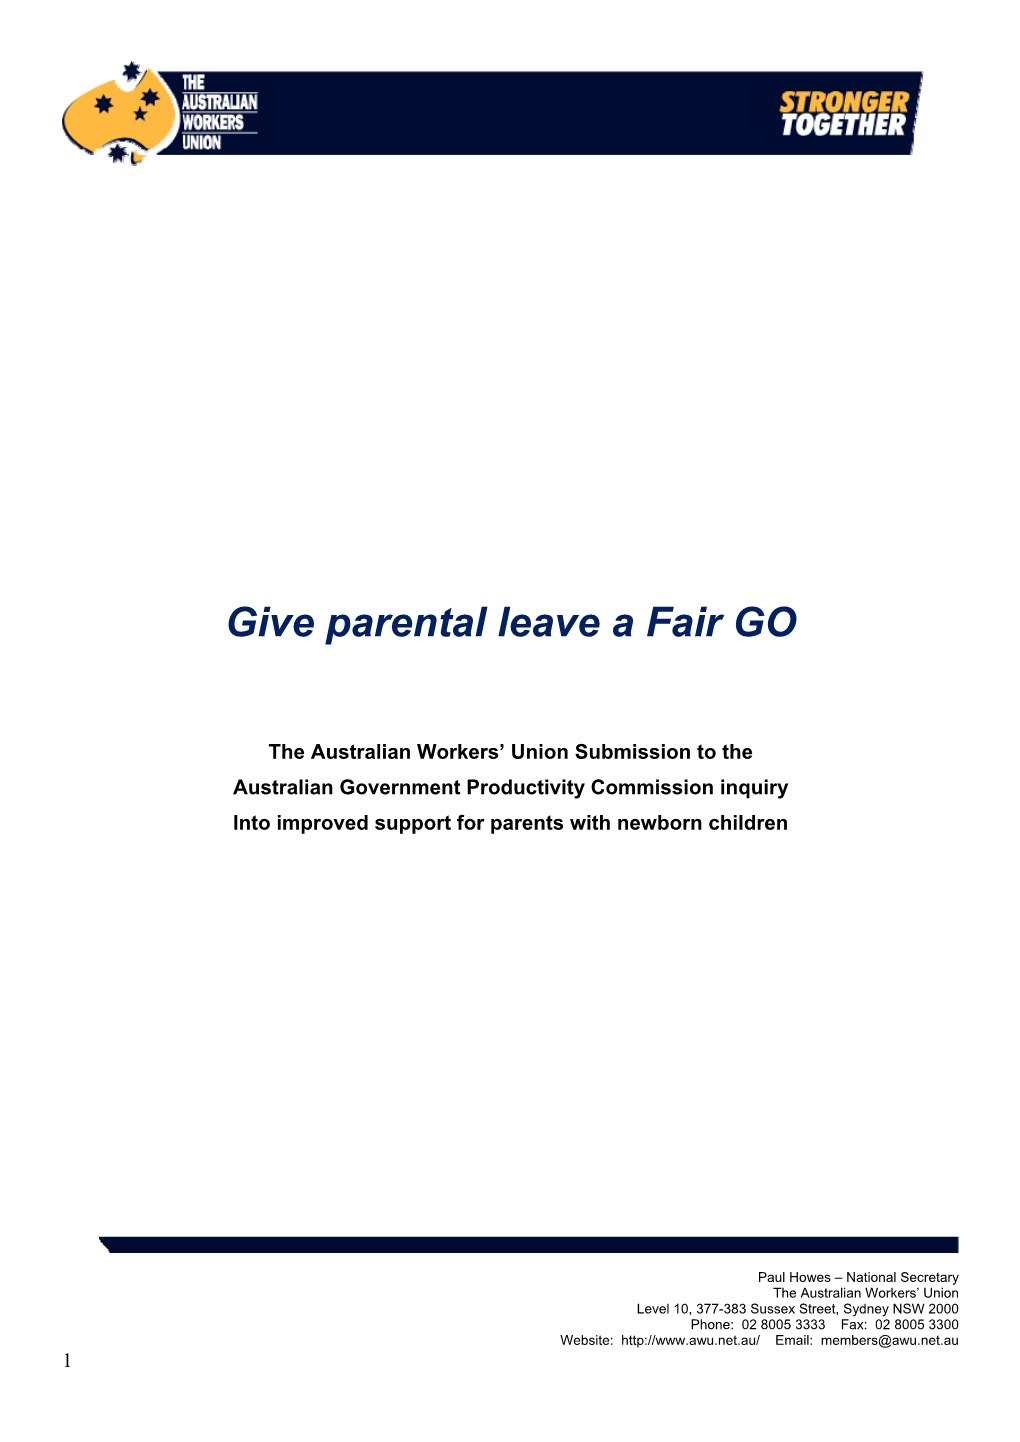 Give Parental Leave a Fair GO